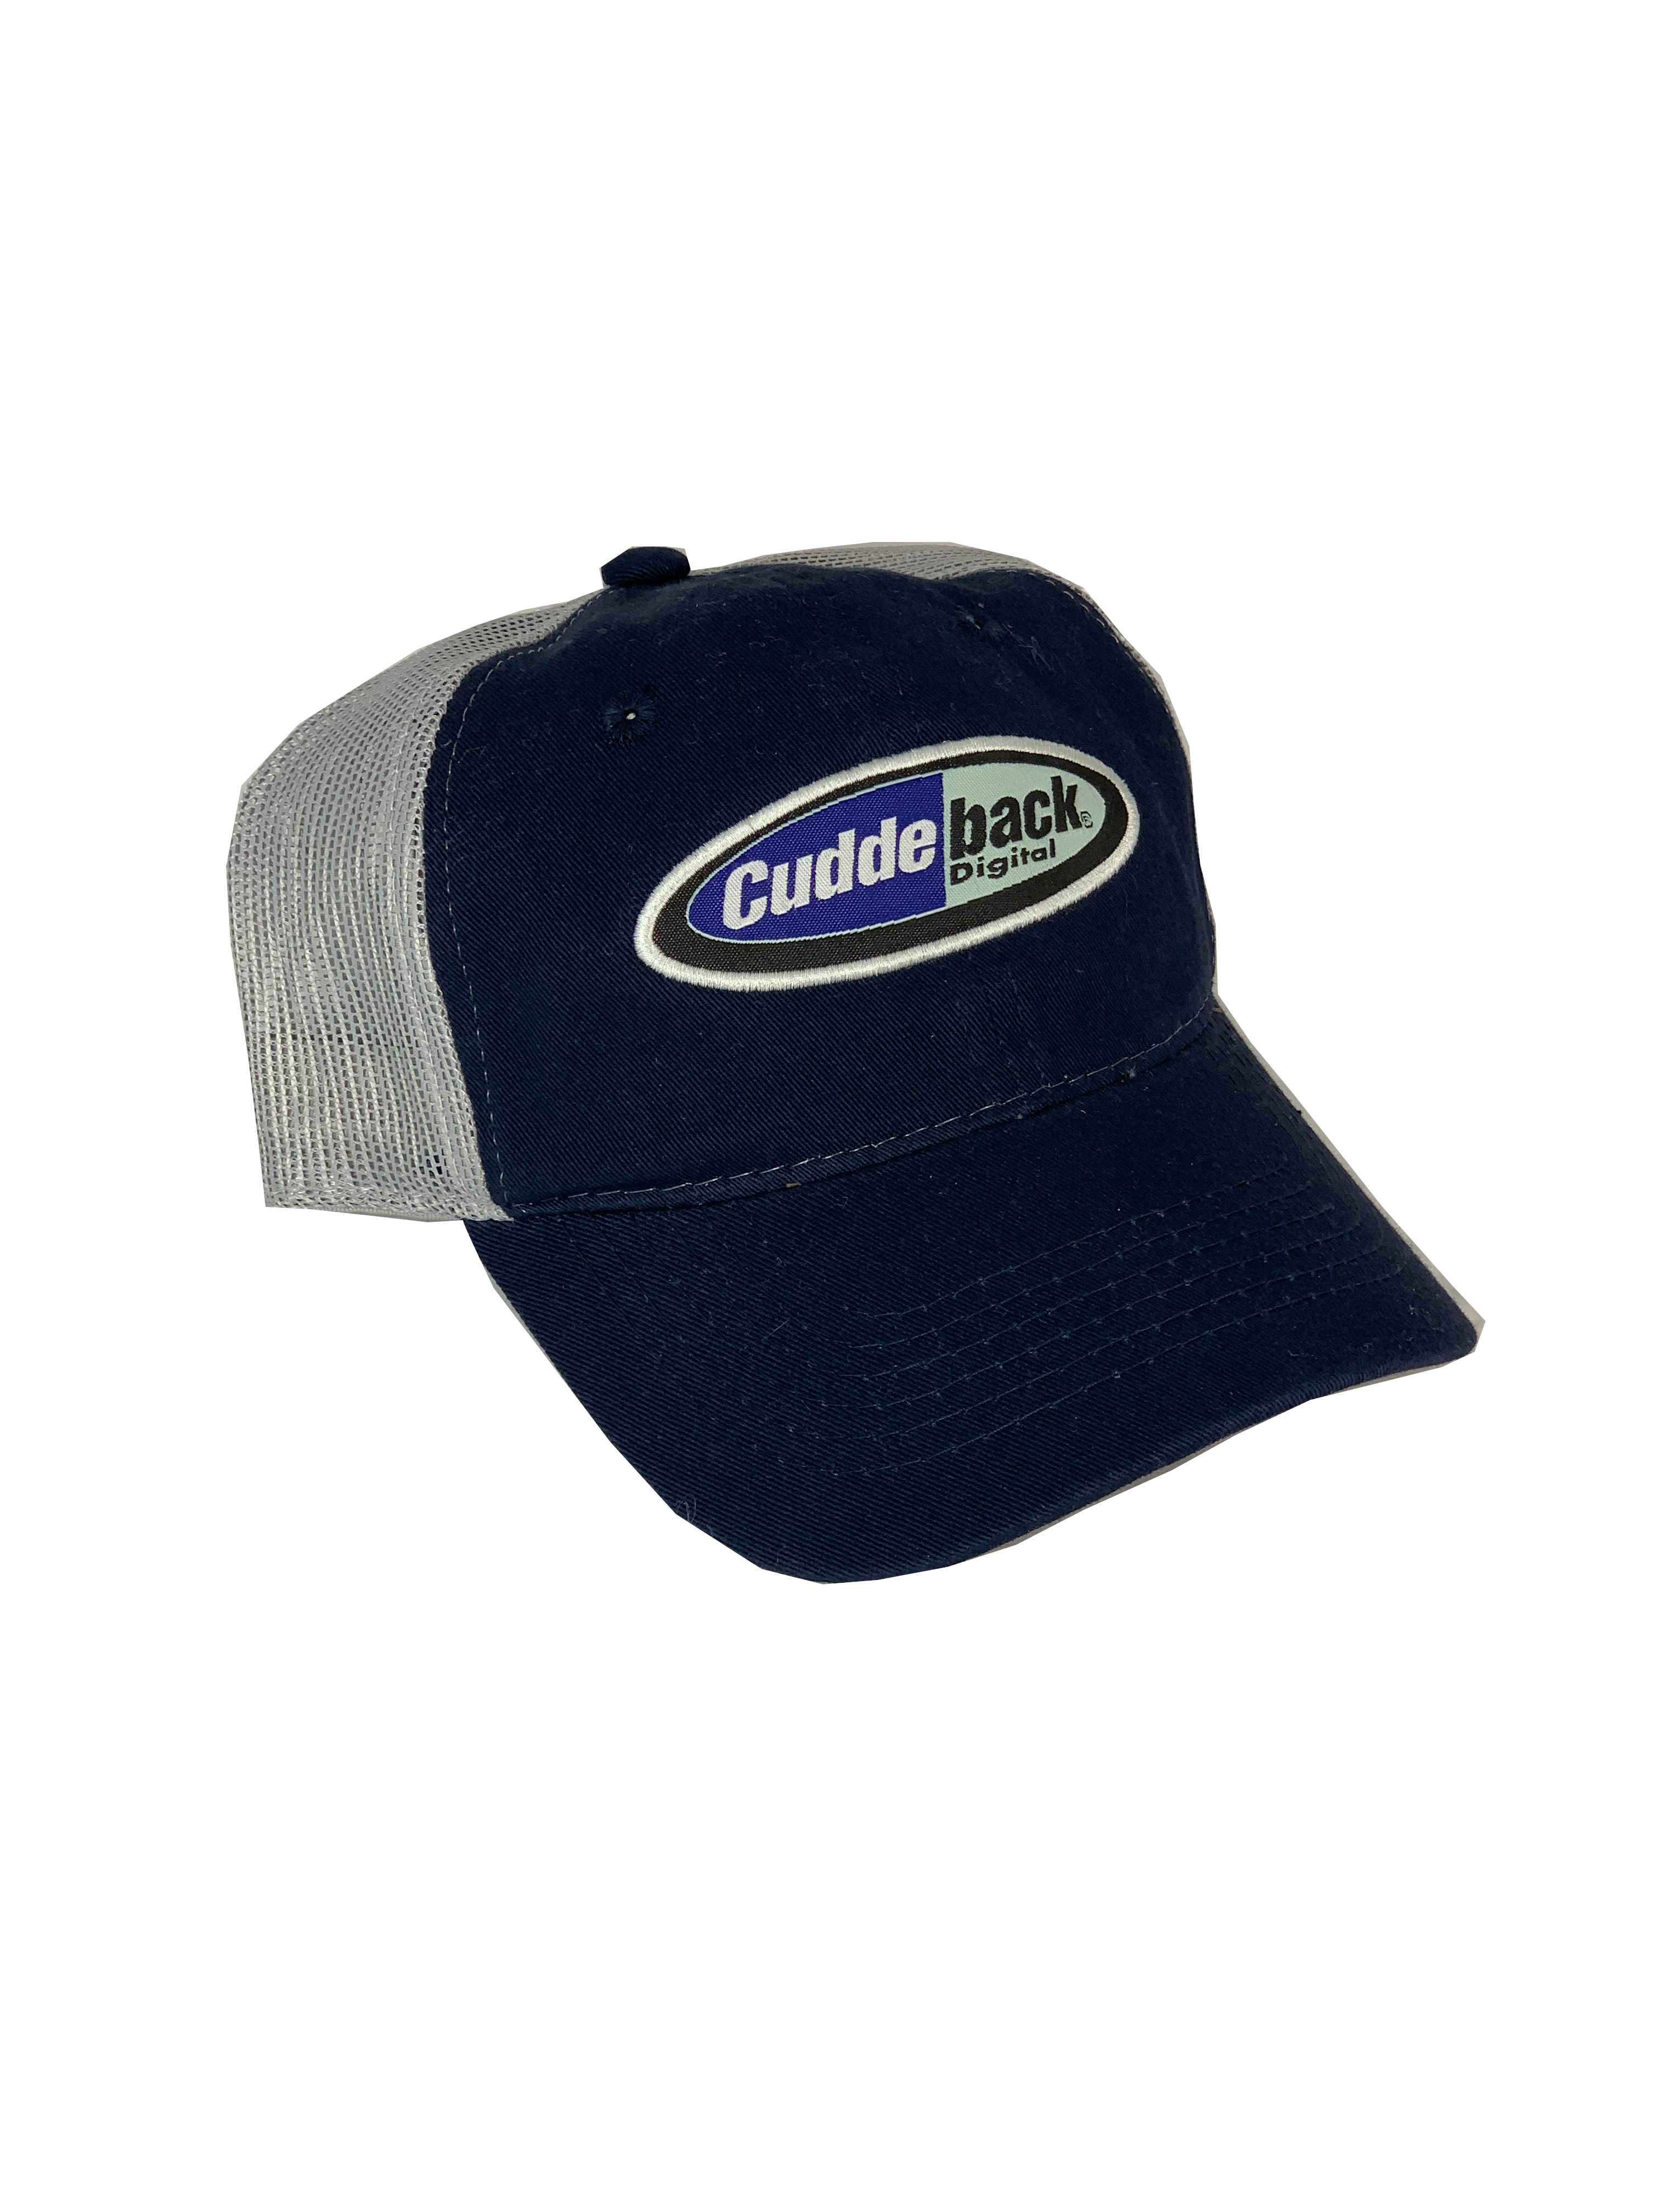 Cuddeback Hat Blue Image